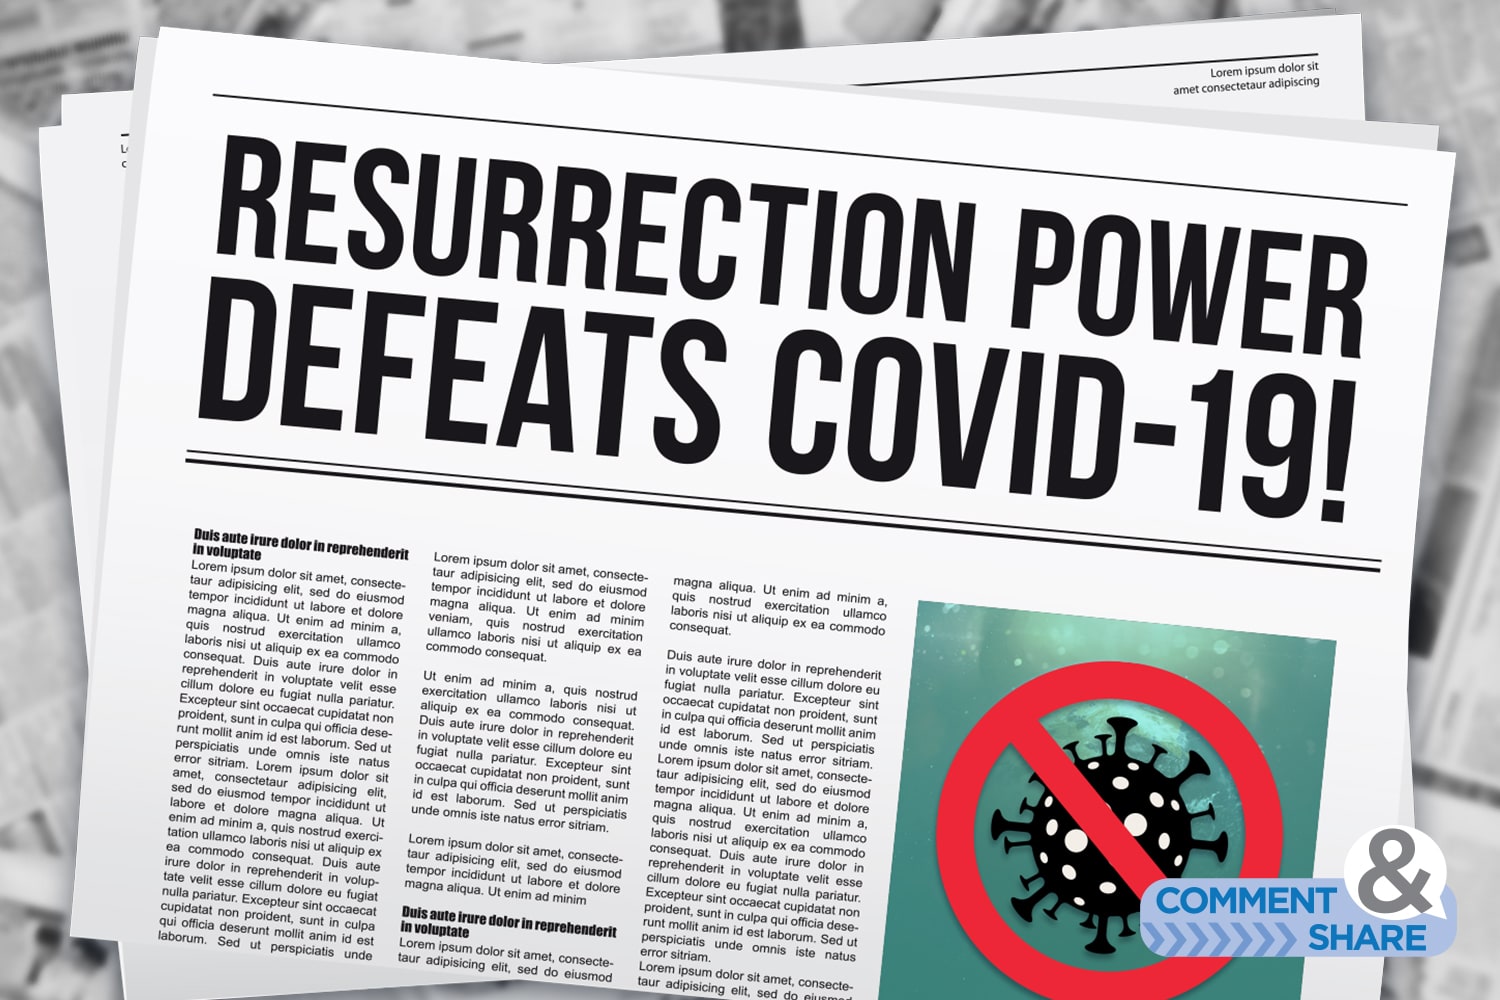 Resurrection Power Defeats COVID-19